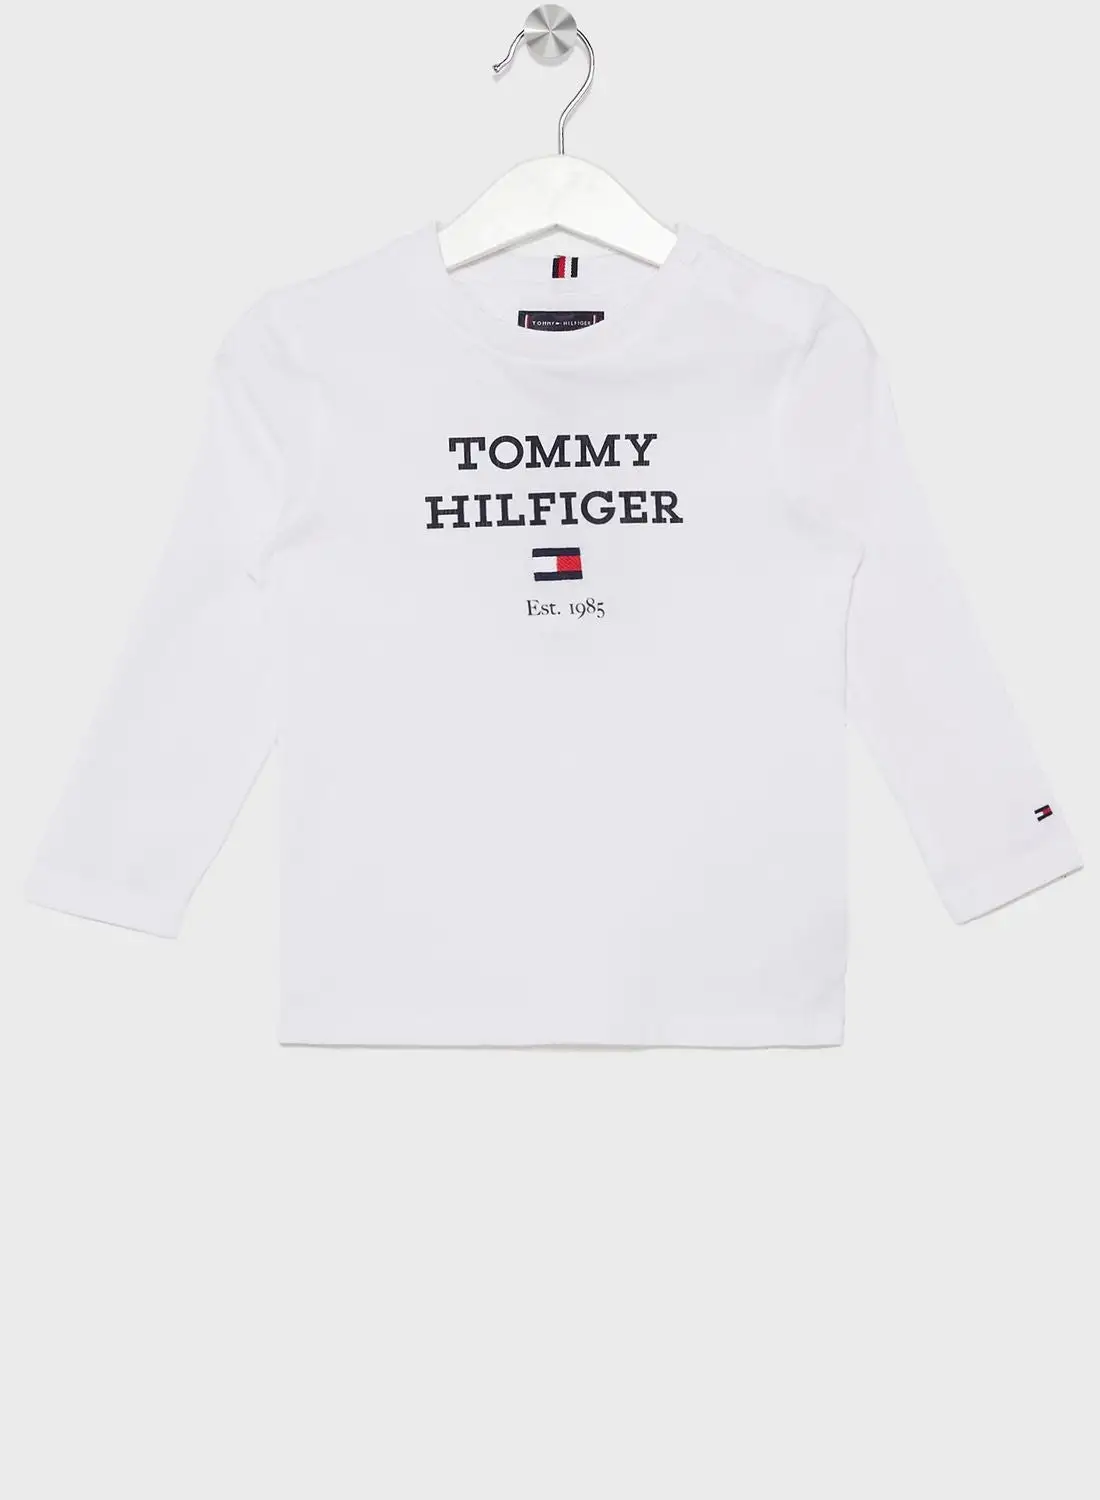 تي شيرت بشعار تومي هيلفيغر للأطفال